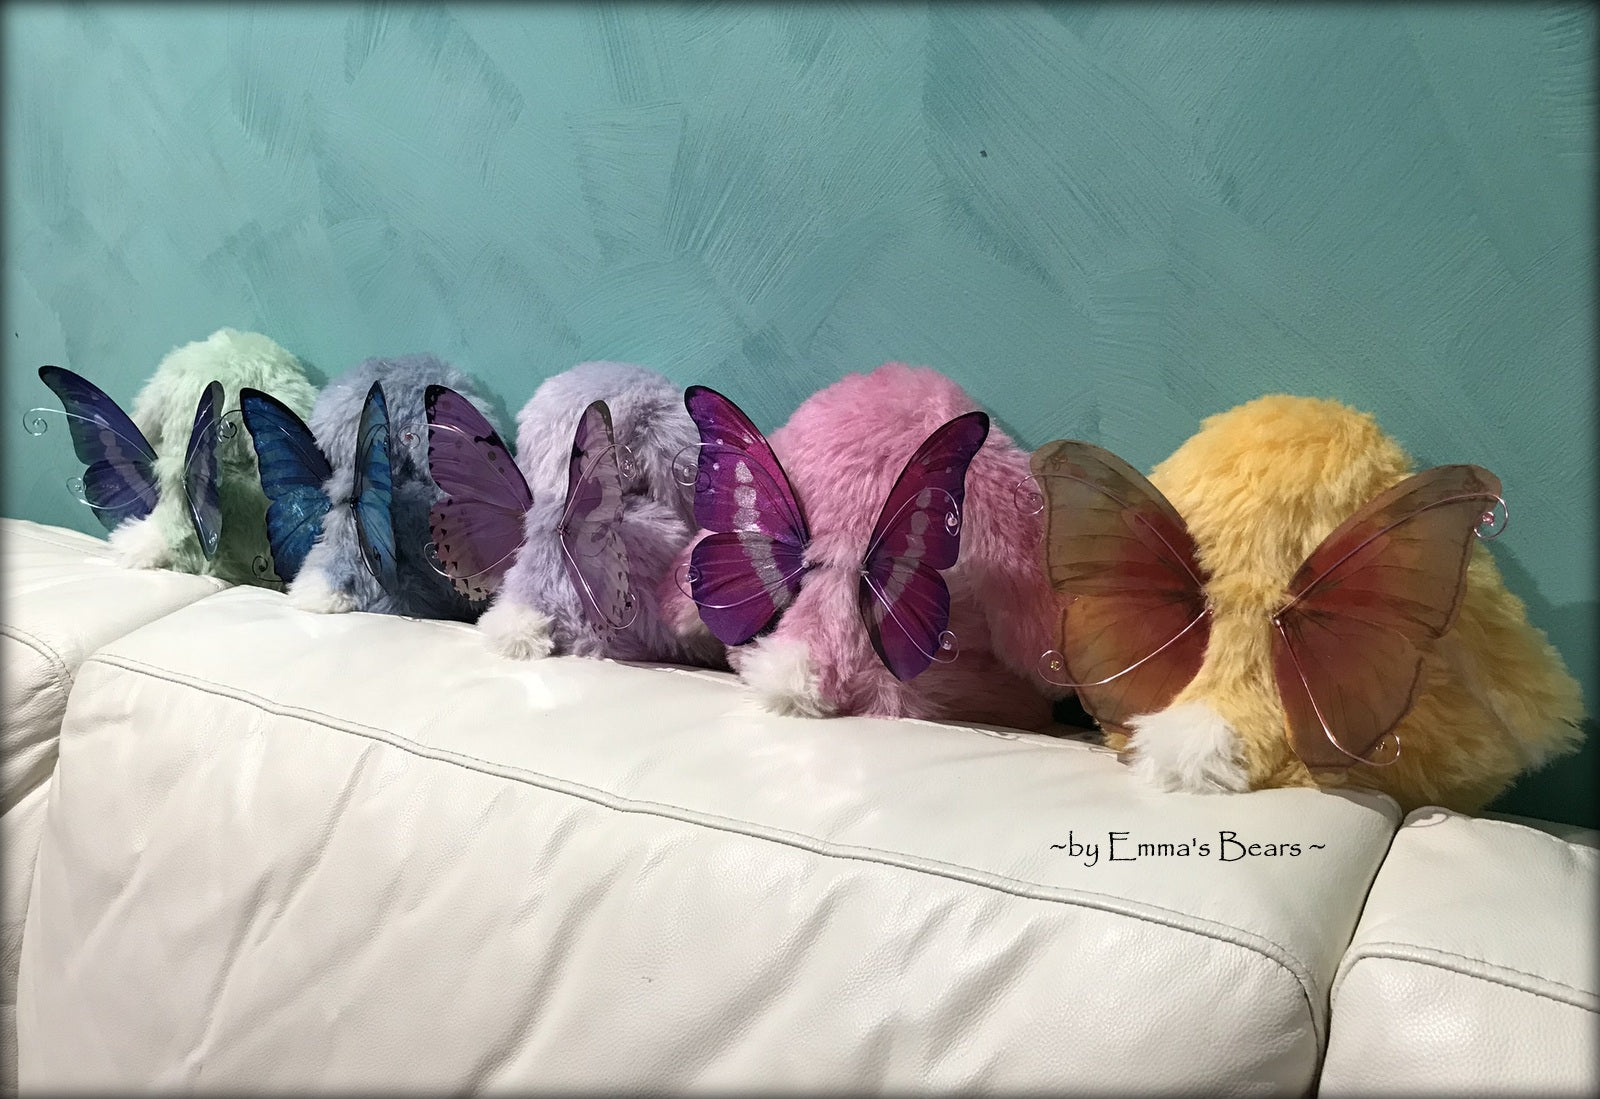 Peter - 9" Hand dyed alpaca artist Easter Bunny by Emma's Bears - OOAK